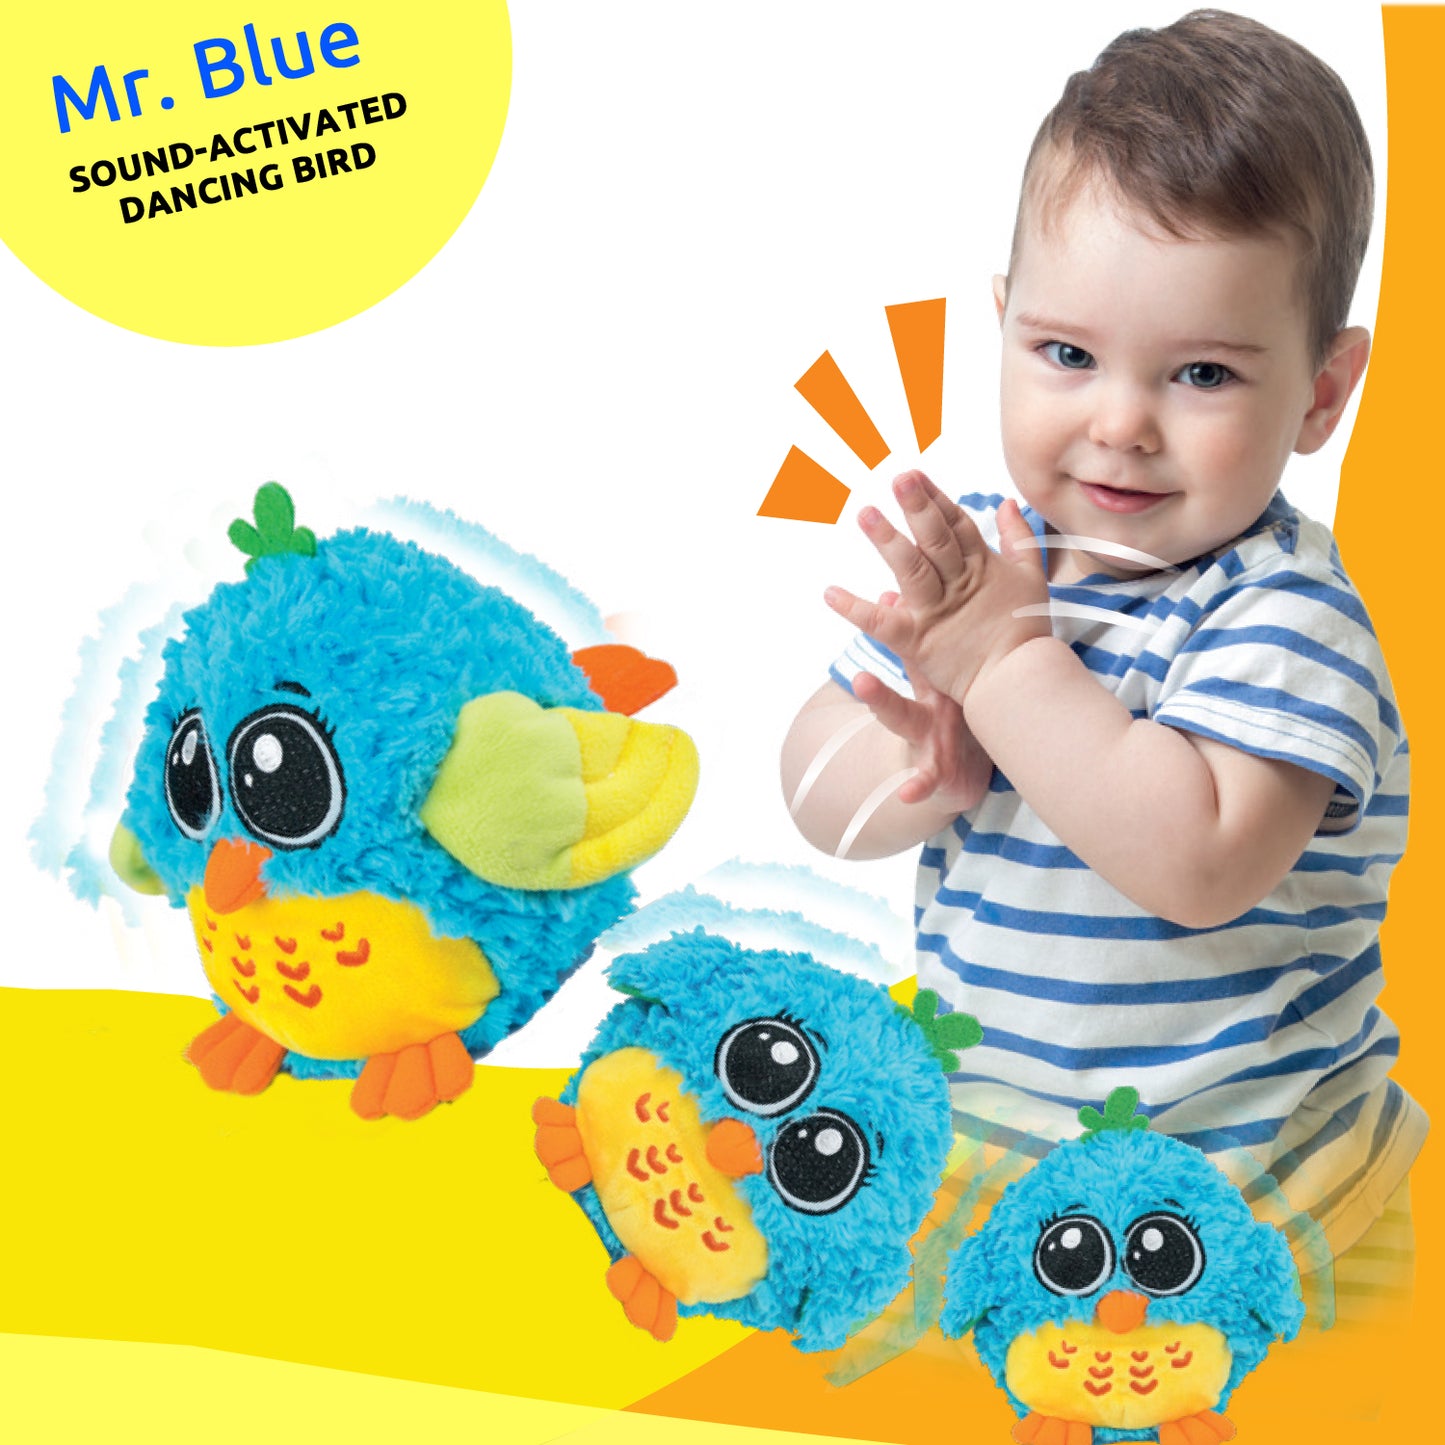 KiddoLab 'Mr. Blue': Singing & Dancing Bird Toy for Babies 6 Months+